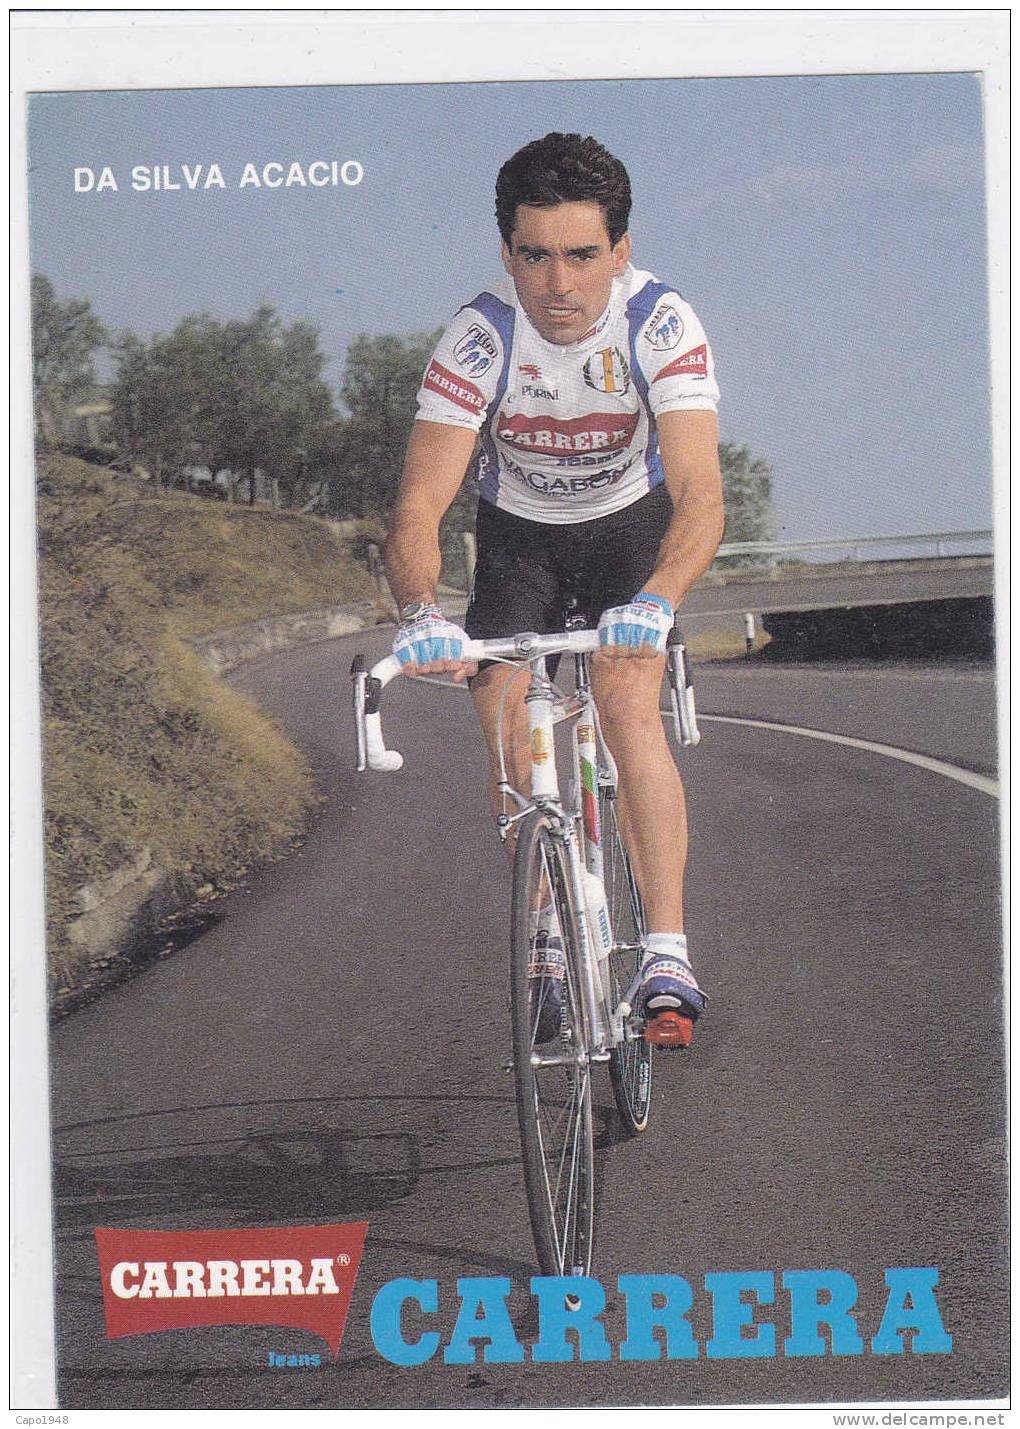 CARD CICLISMO DA SILVA ACACIO PUB. CARRERA IEANS  -FG-N-2-0882-9016-15-D - Cycling